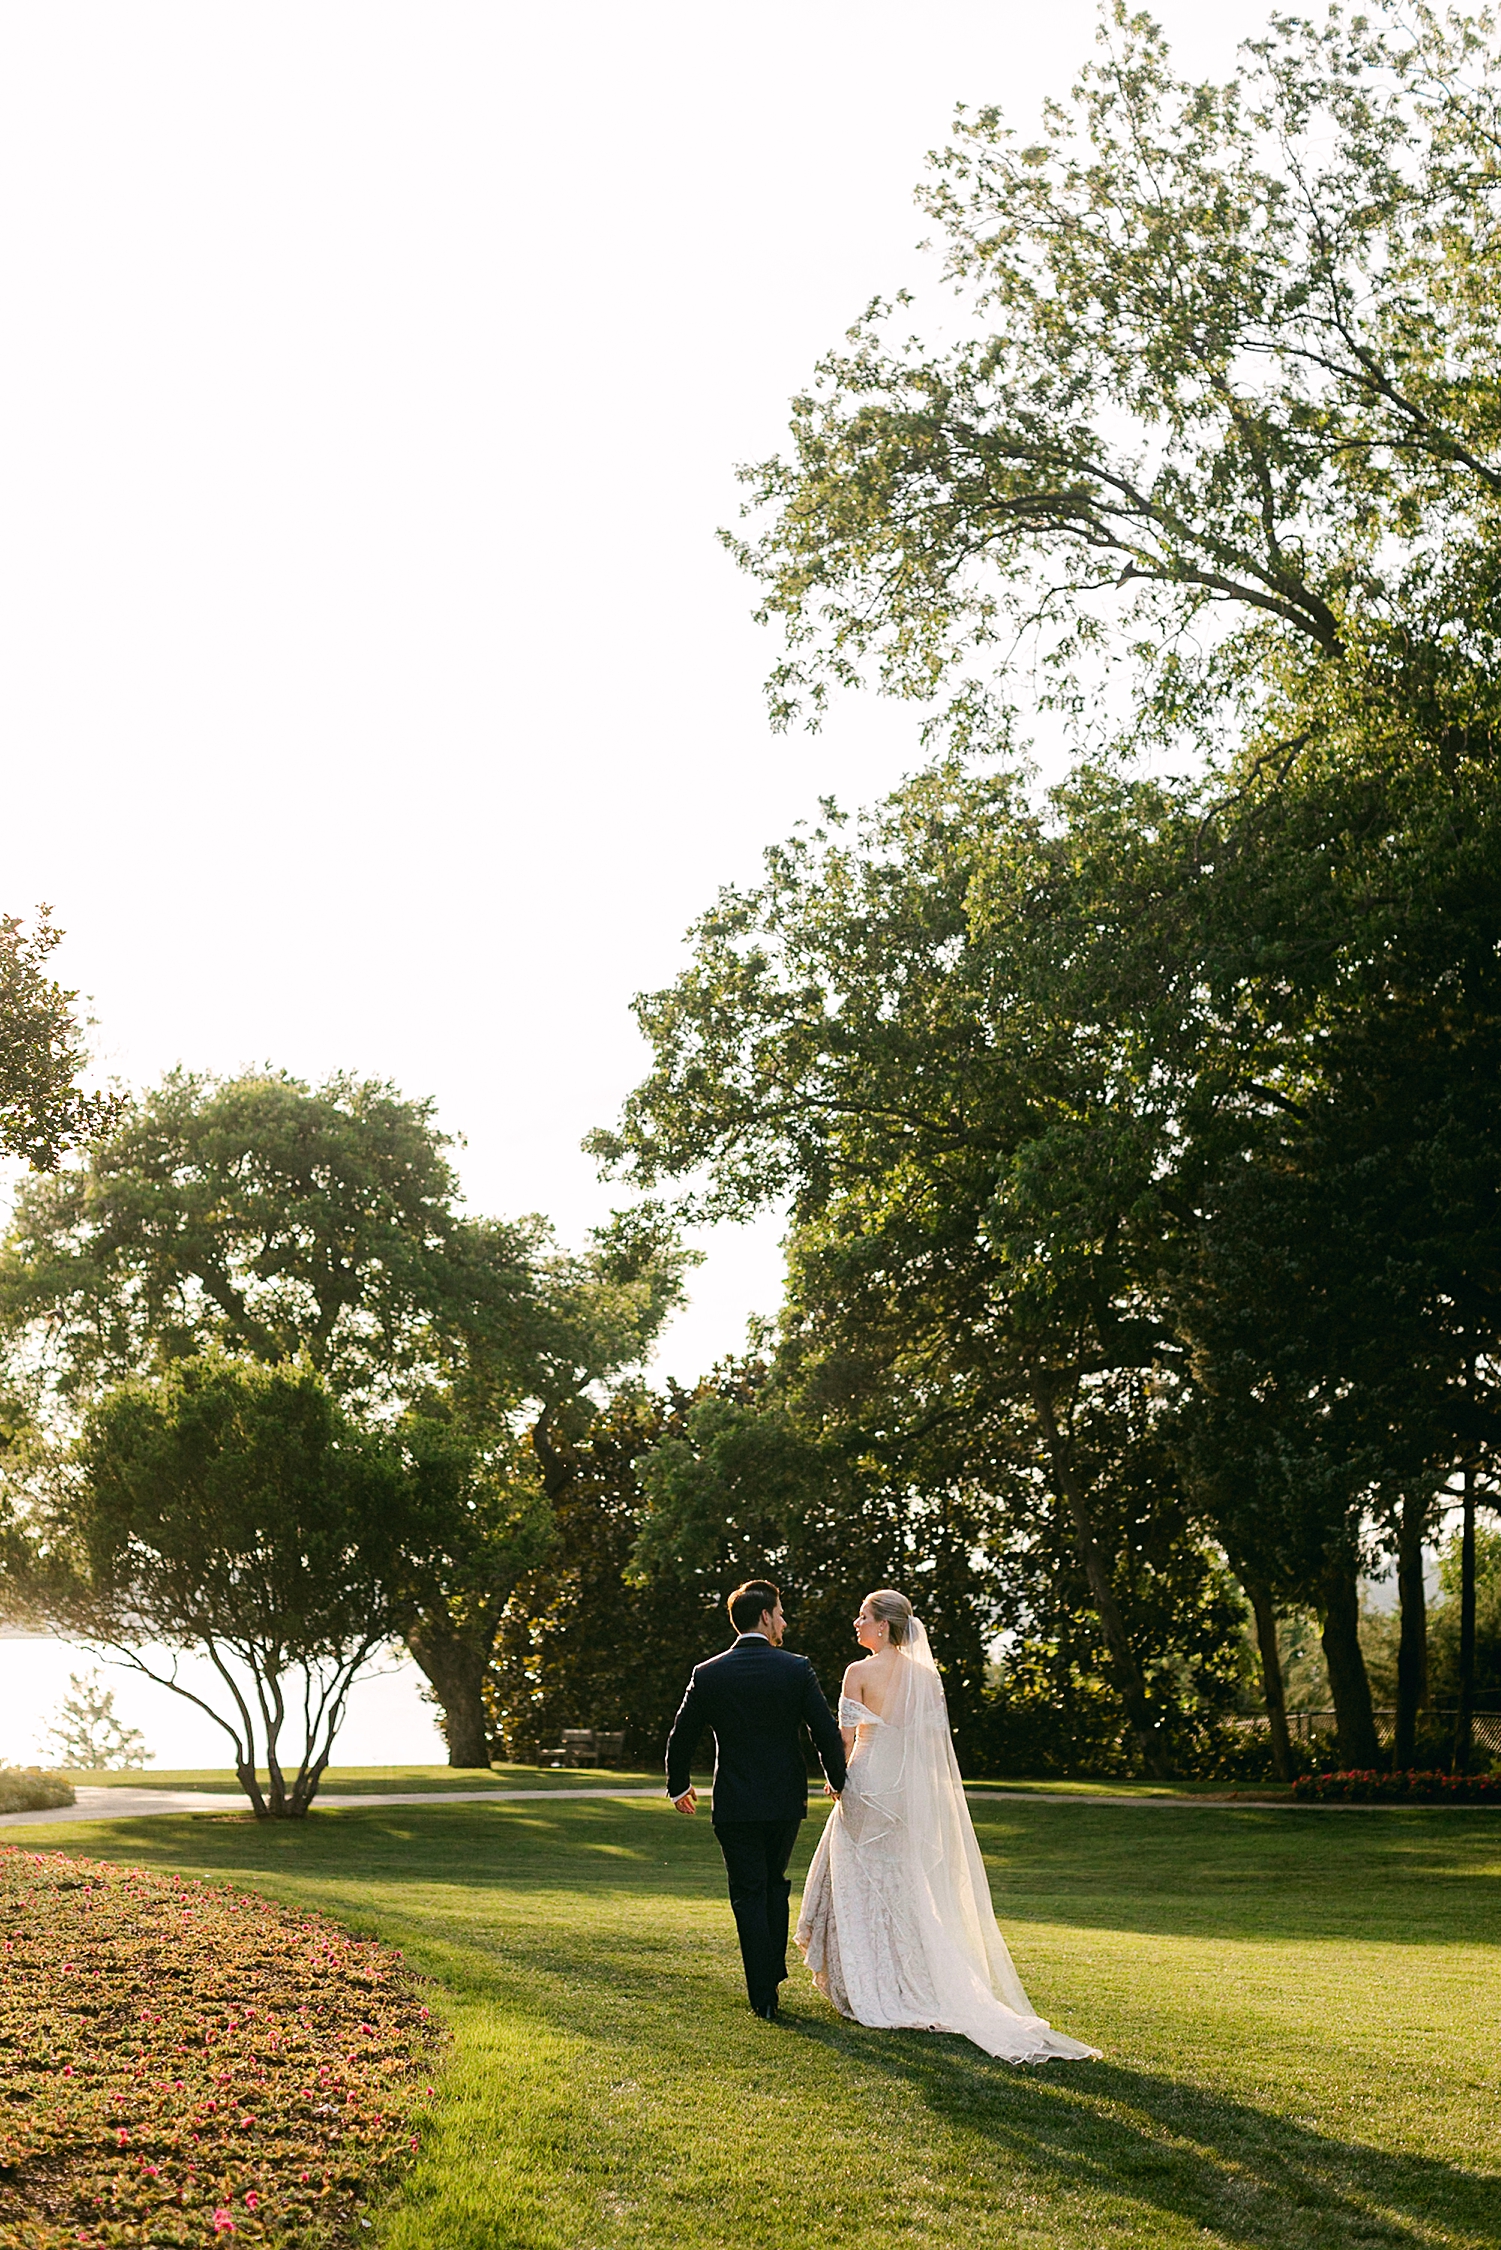 Bride and groom recessional Dallas white rock lake Arboretum wedding sunset